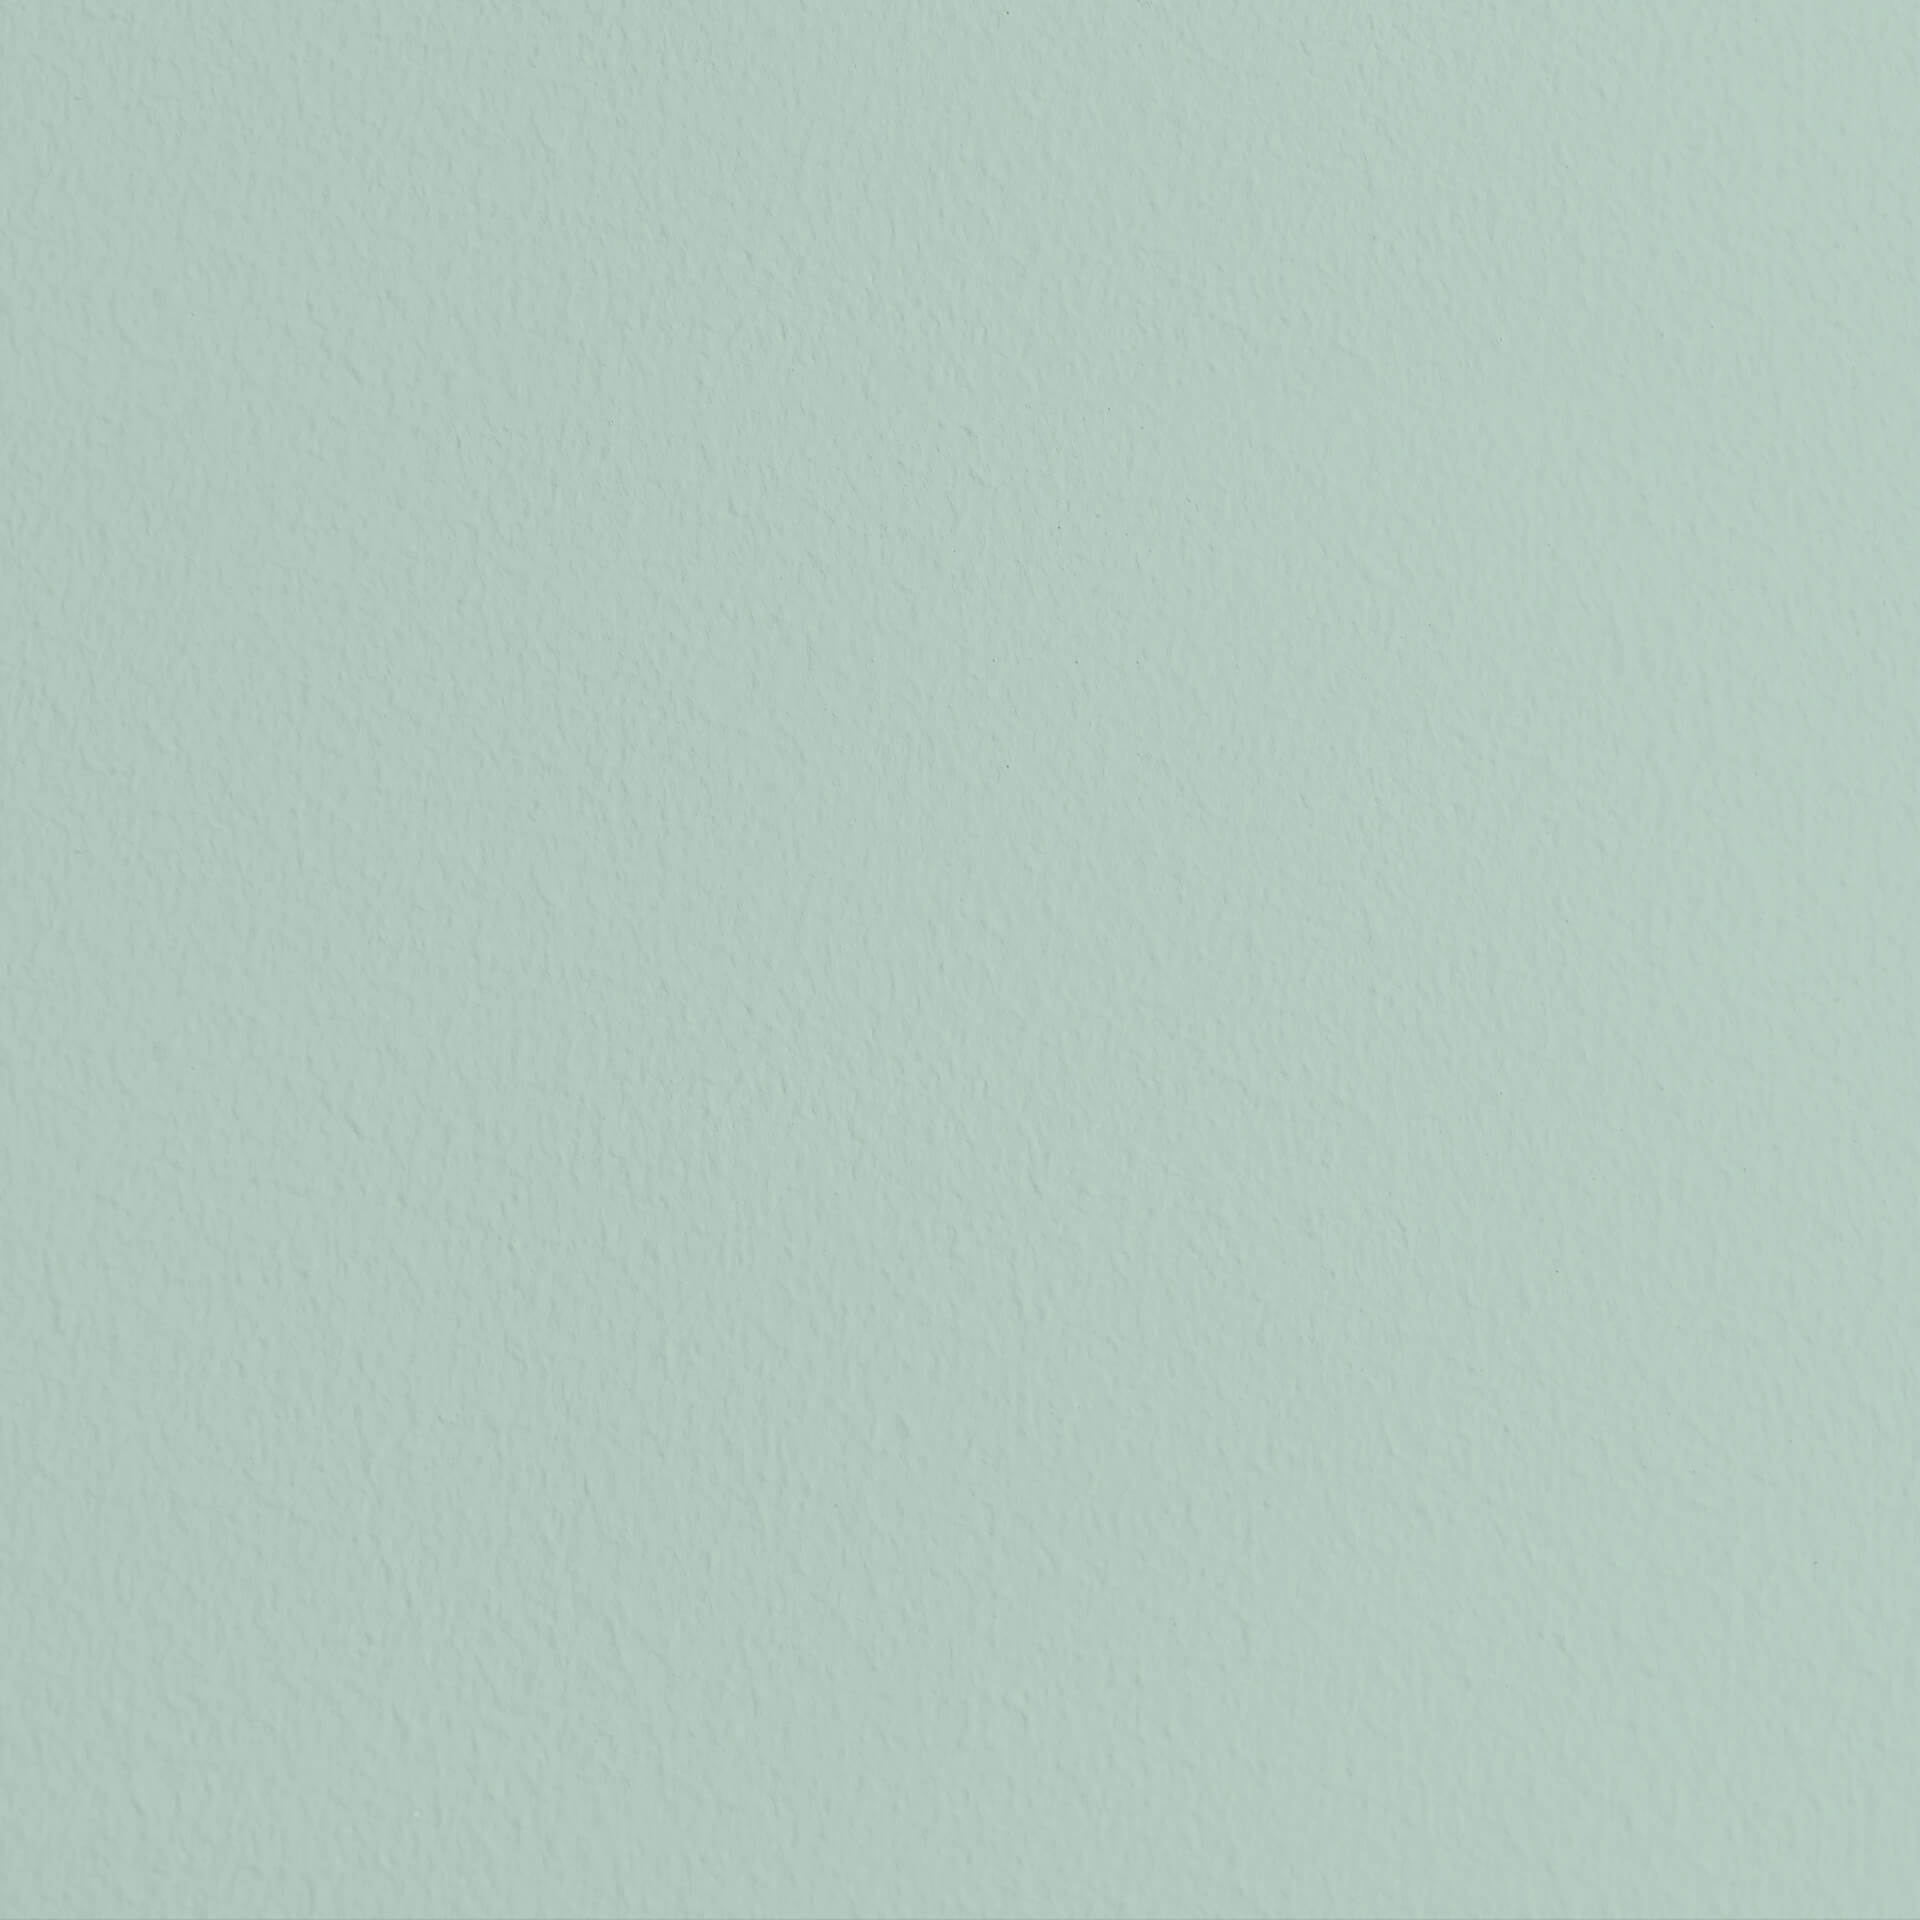 Mylands Copper Green No. 36 - Marble Matt Emulsion / Wandfarbe, 2.5L